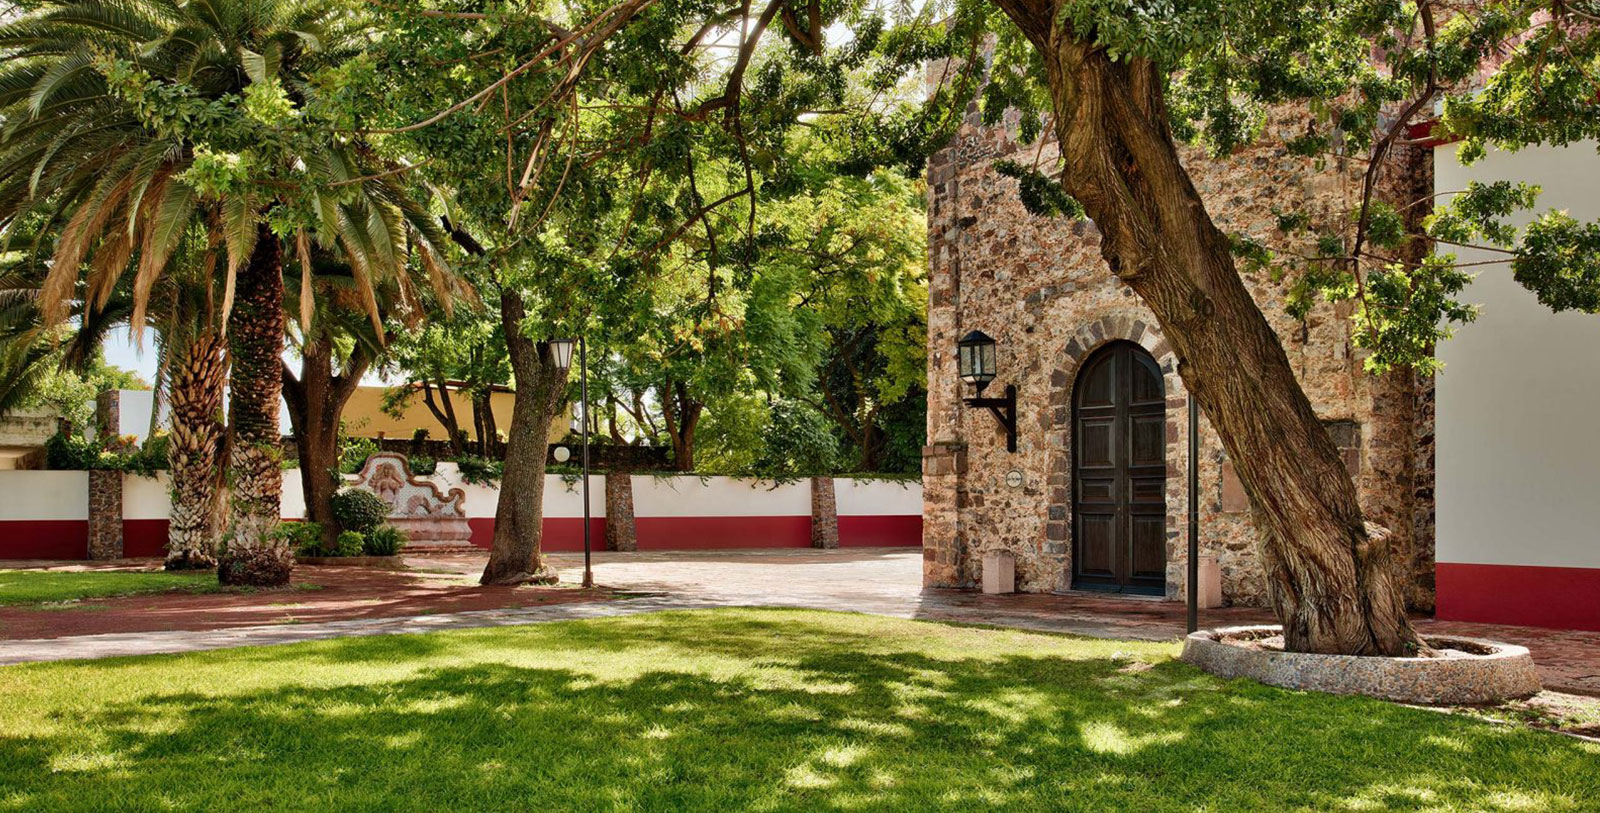 Image of Courtyard & Exterior, Hacienda Jurica by Brisas, Queretaro, Mexico, 1551, Member of Historic Hotels Worldwide, Discover